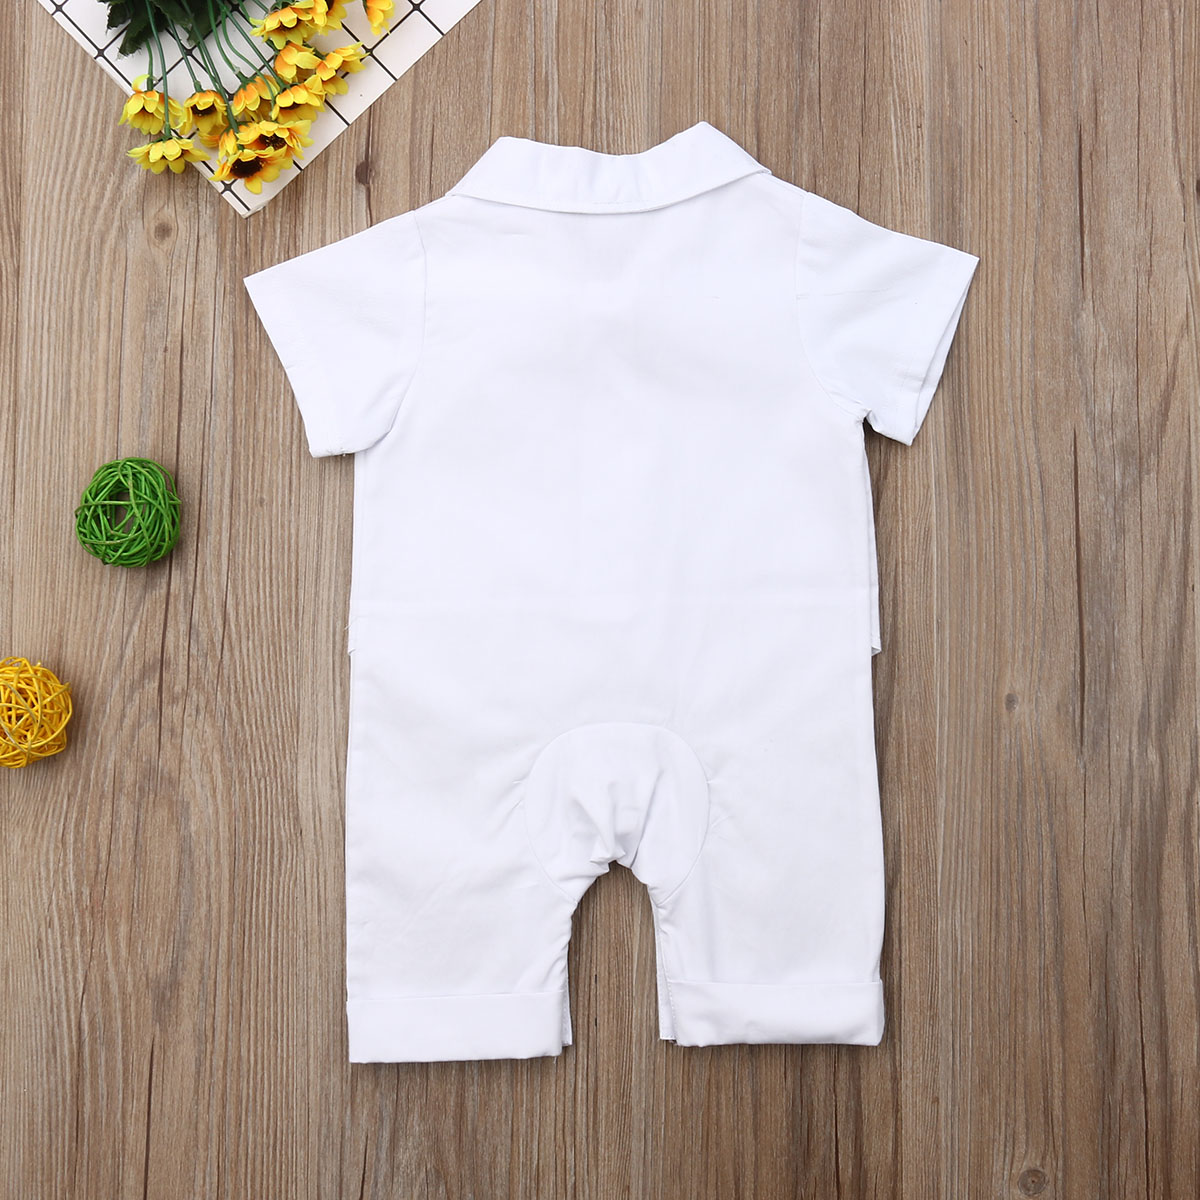 2019 Newborn Boy Kids Baby Rompers Tuxedo Suit Outfits Striped Patchwork Jumpsuit Romper Gentleman 0-24M